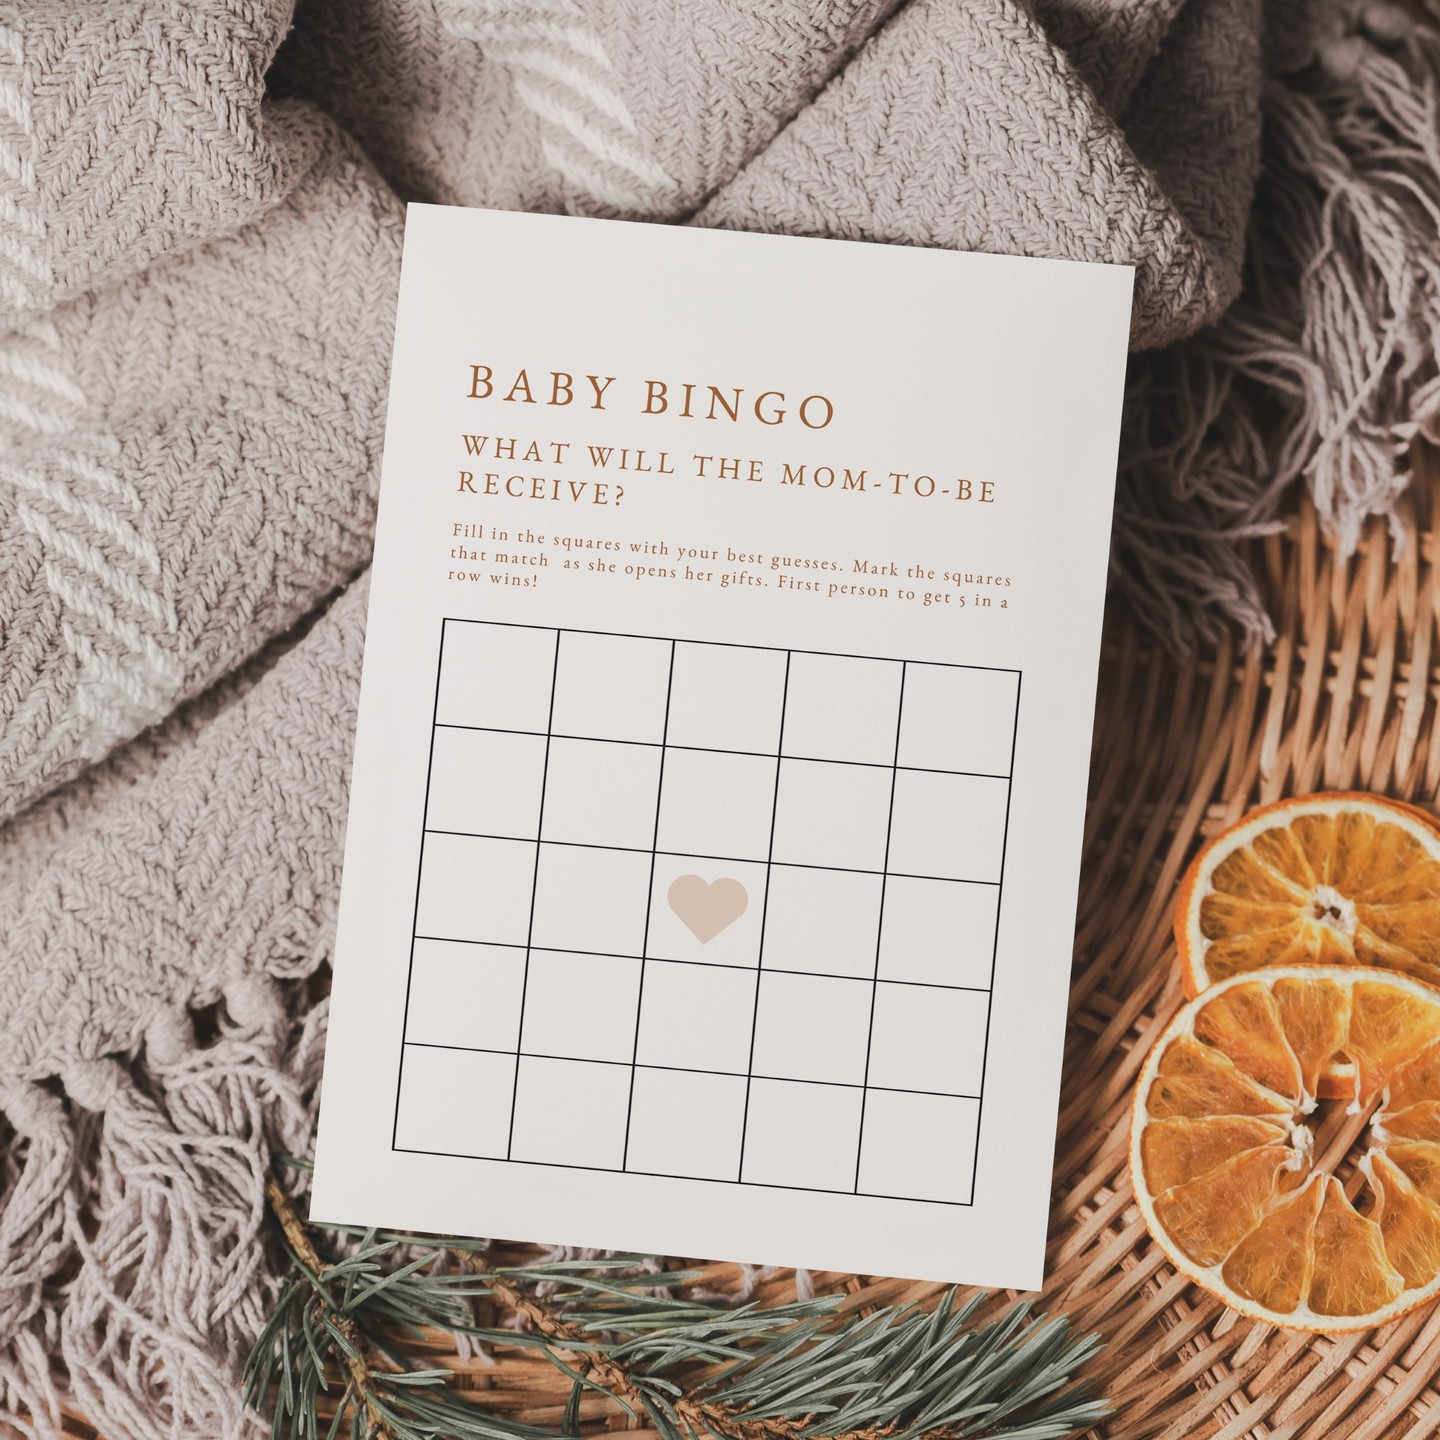 A blank baby bingo sheet is pictured. Photo by Instagram user @seasaltpaperieshop.